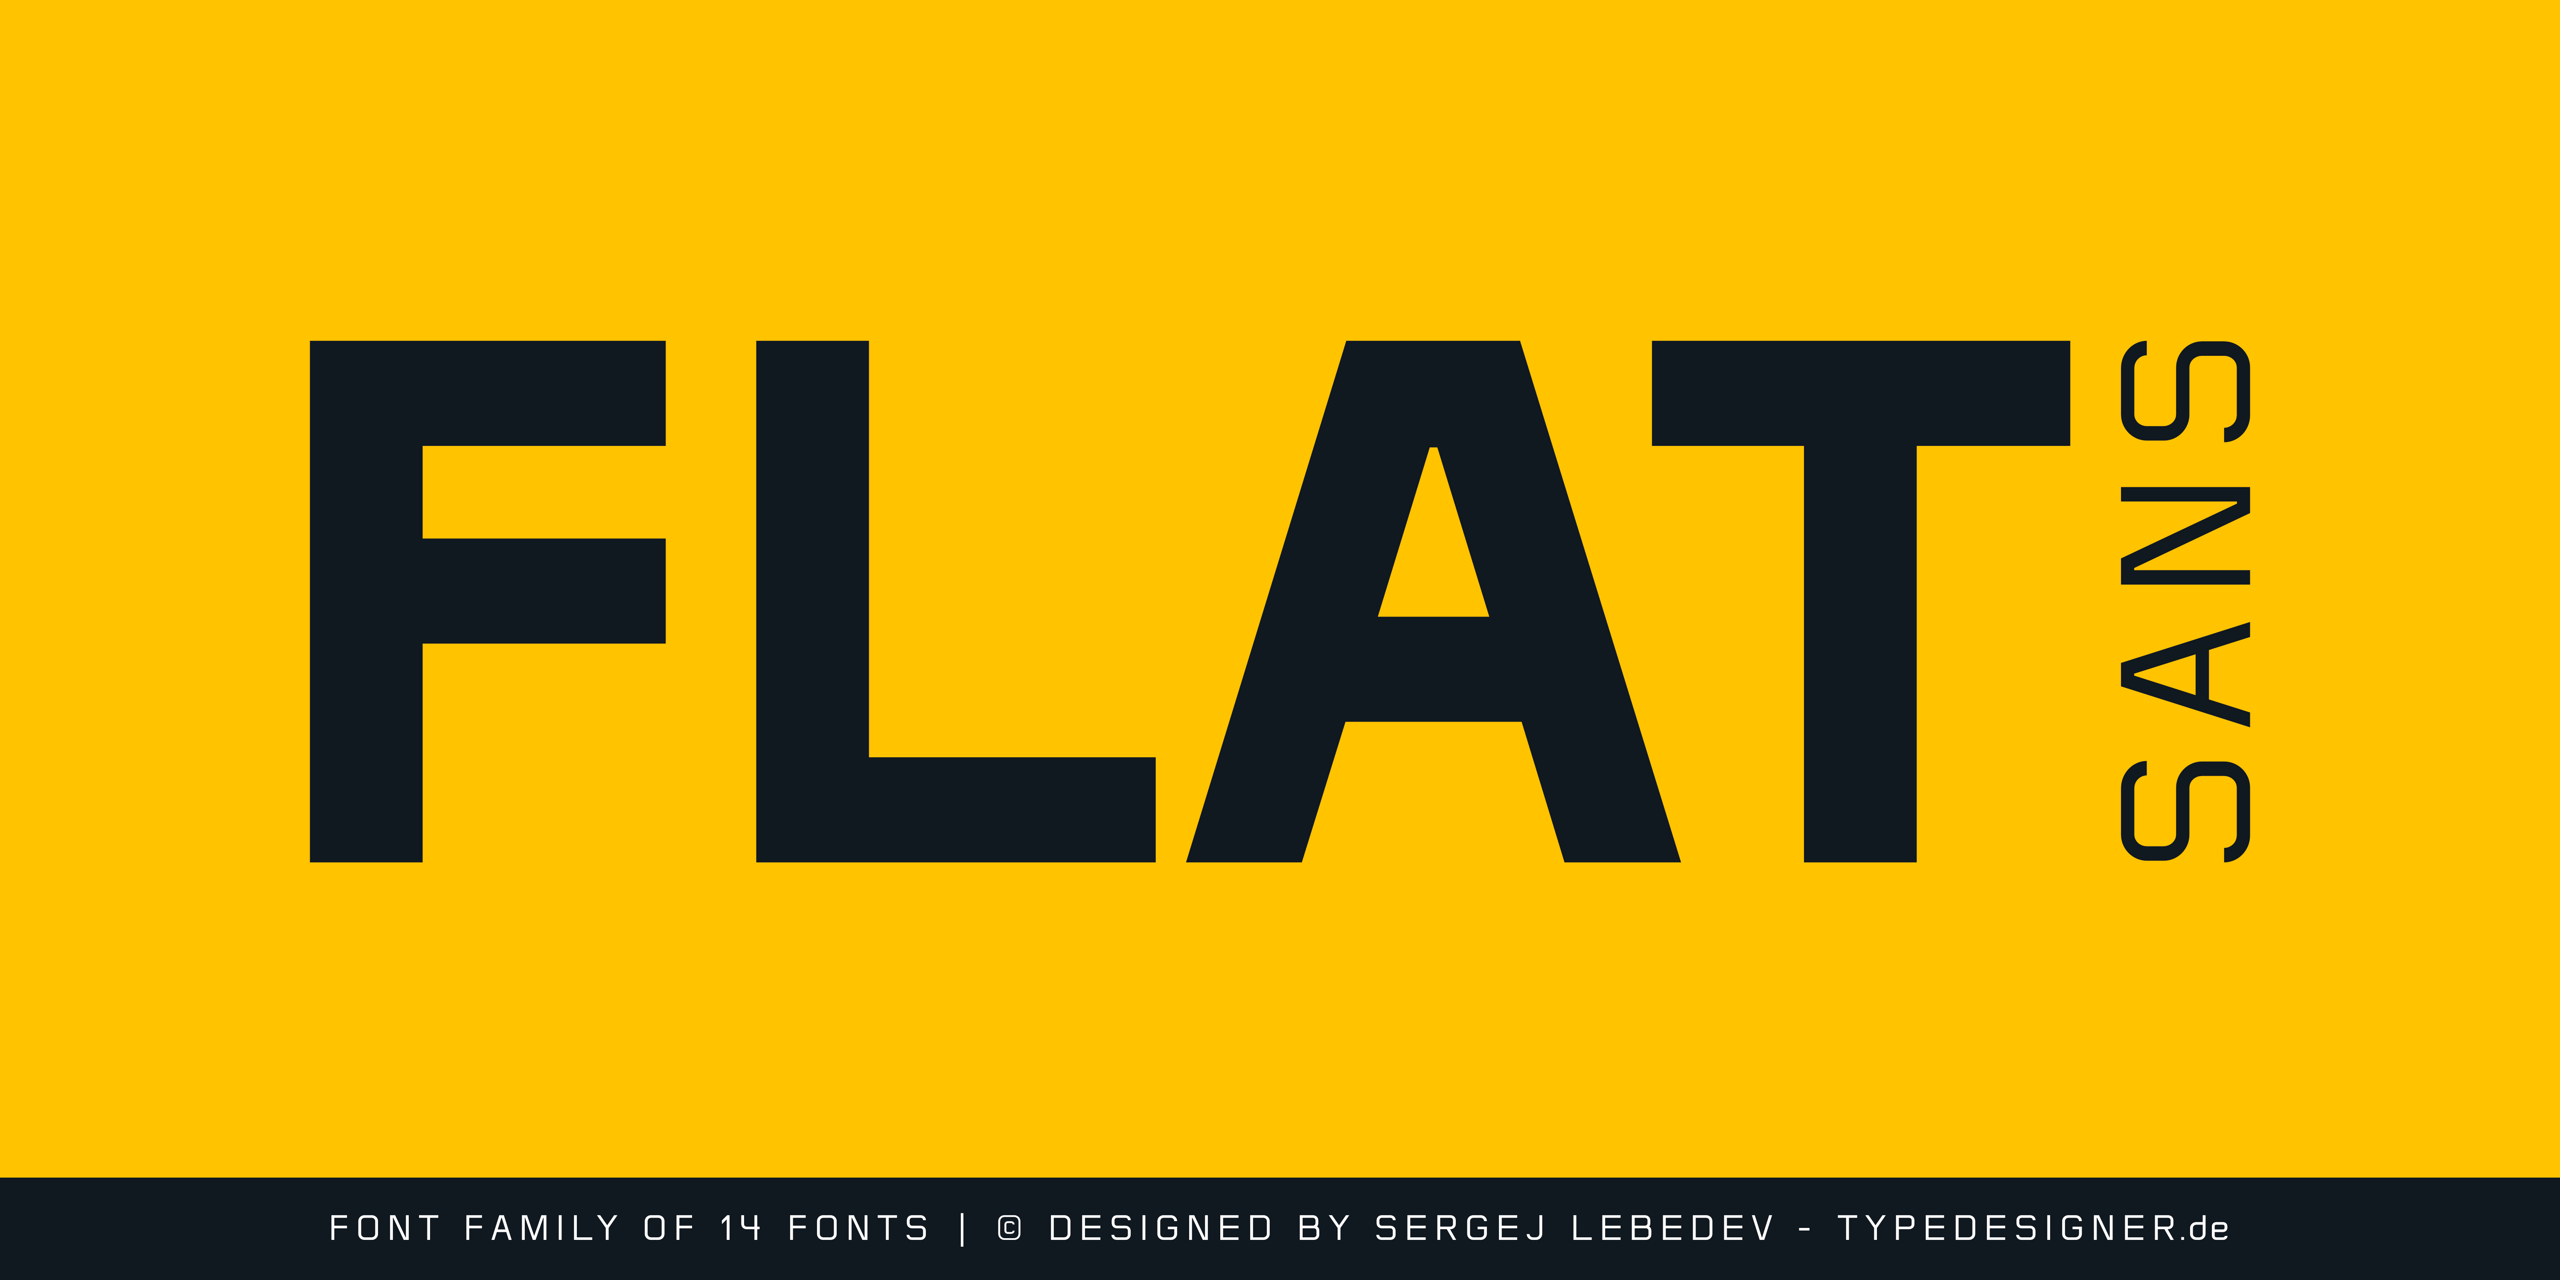 Flat Sans font family of 14 fonts. Type Design by Sergej Lebedev.